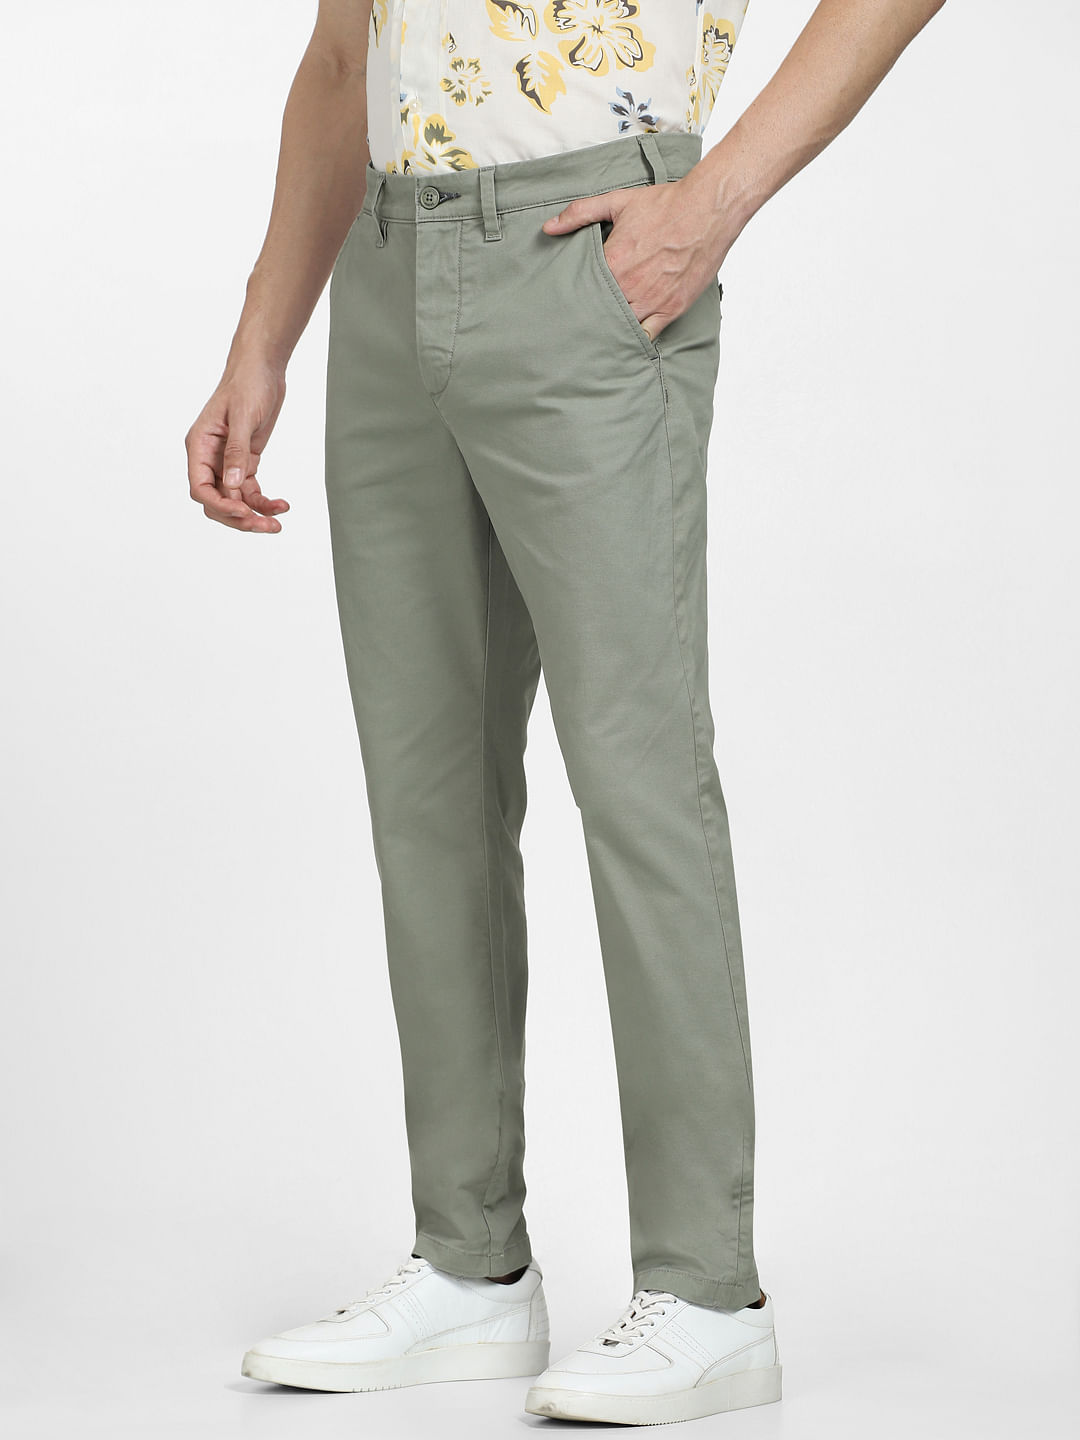 Men's Stretch Dress Pants Slim Fit Skinny Chino Pants | eBay